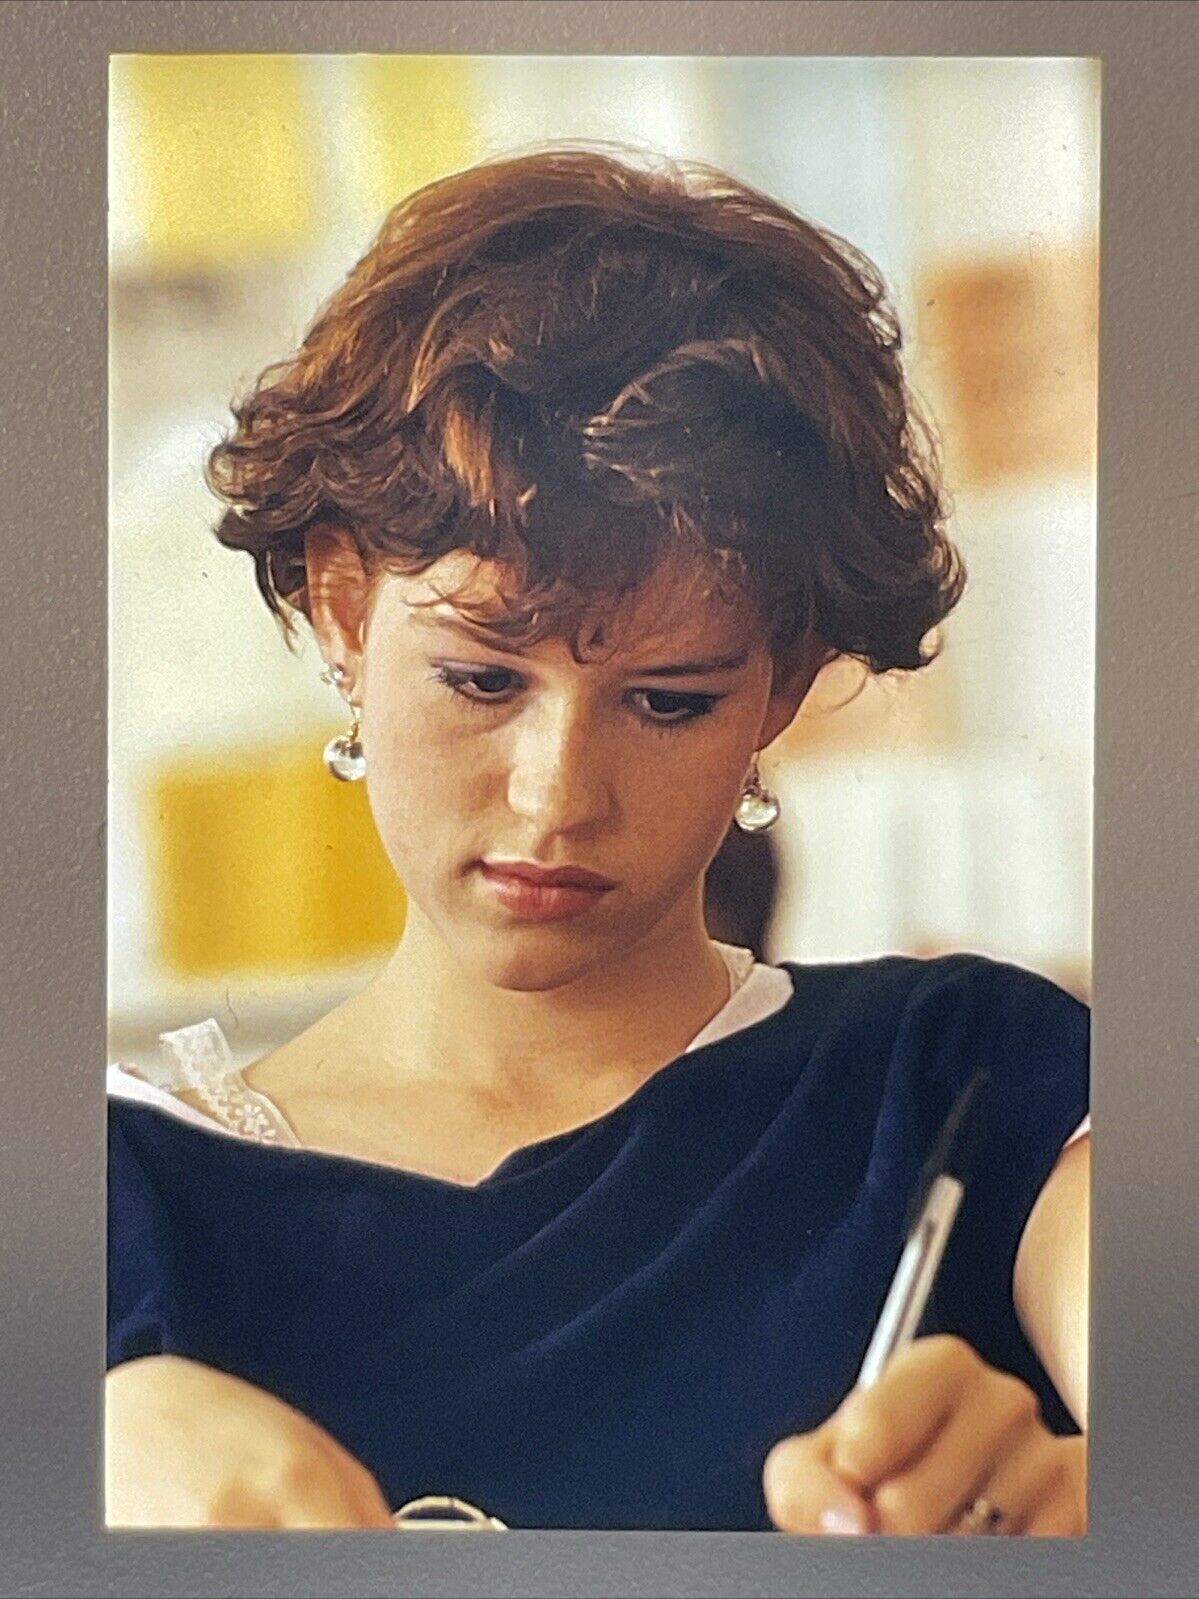 1983 “Sixteen Candles” Original 35mm Transparency Color Slide